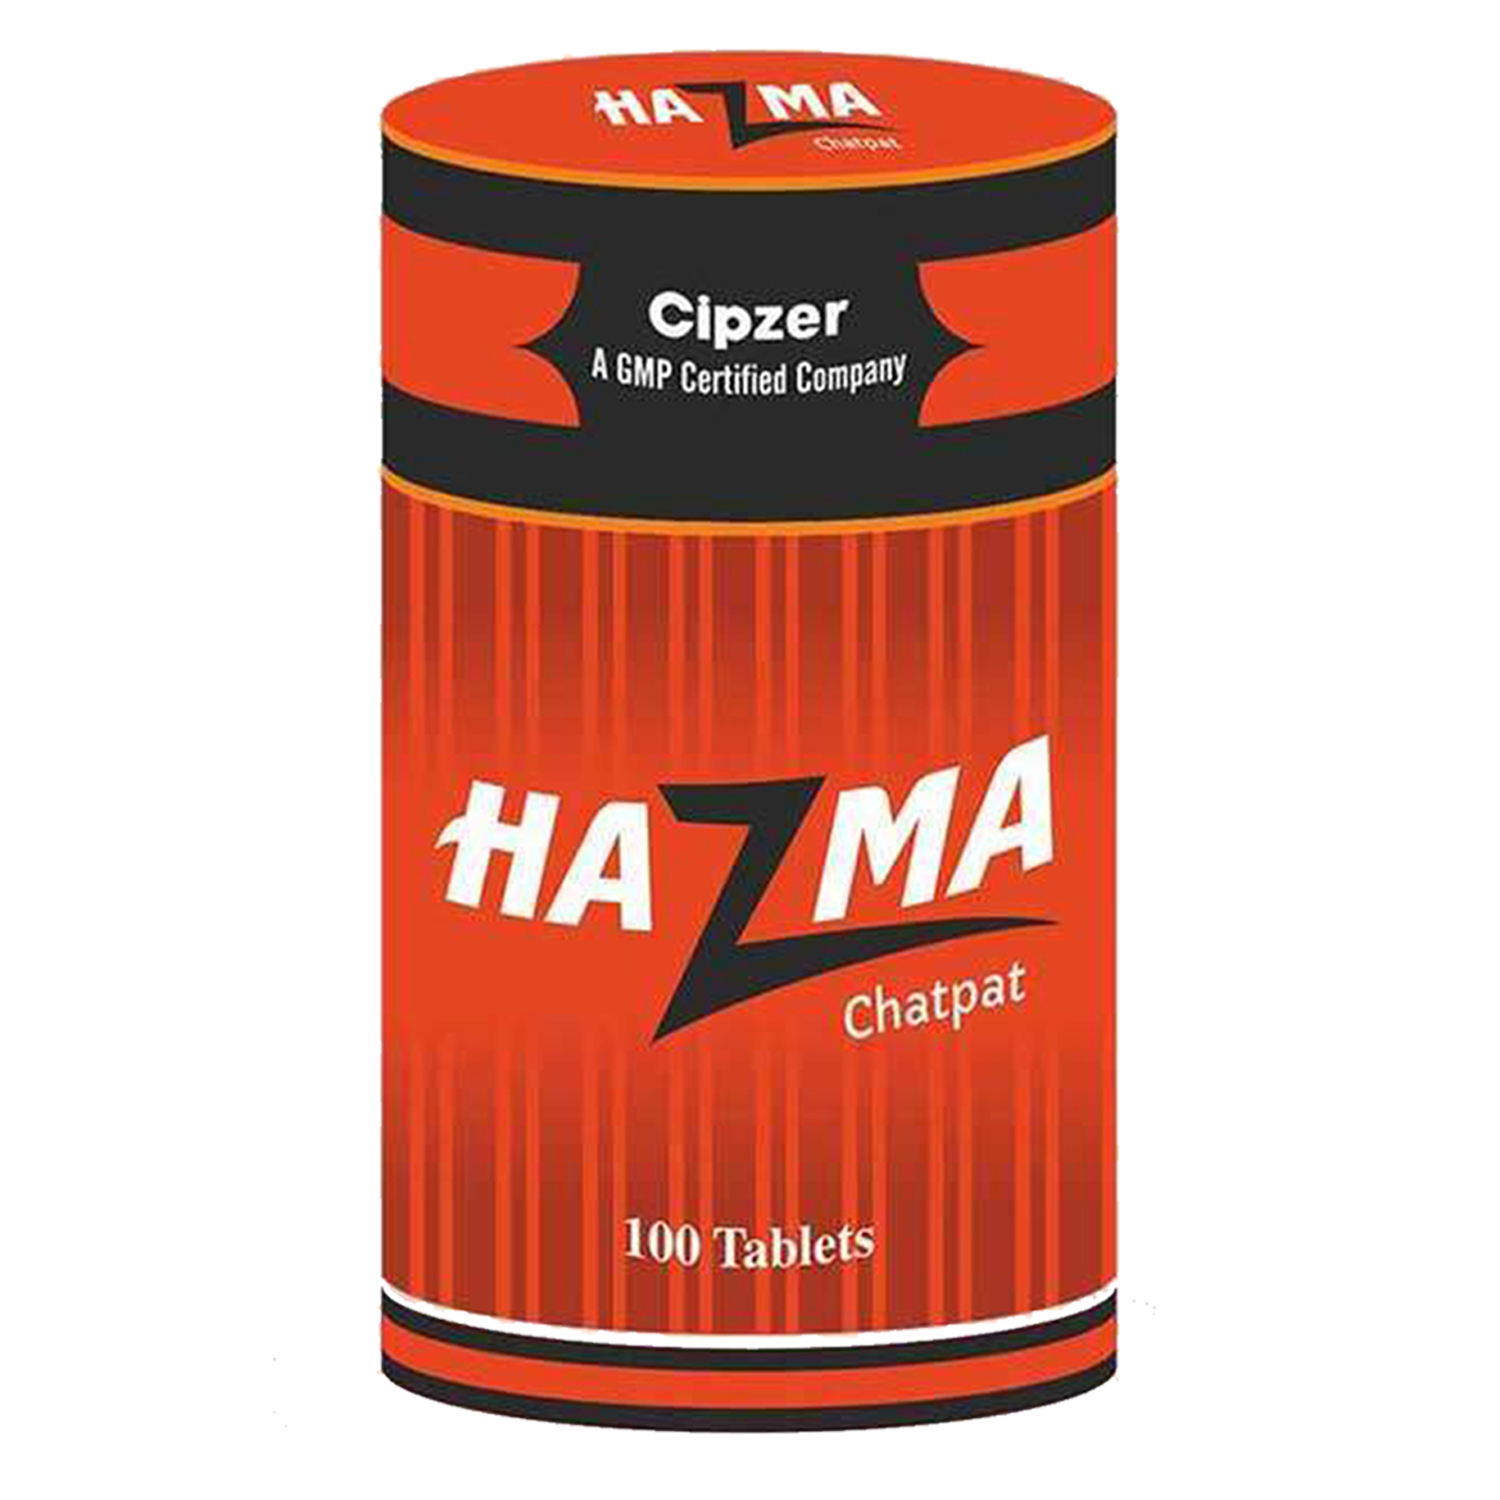 Buy Cipzer Hazma Chatpat Tablets at Best Price Online